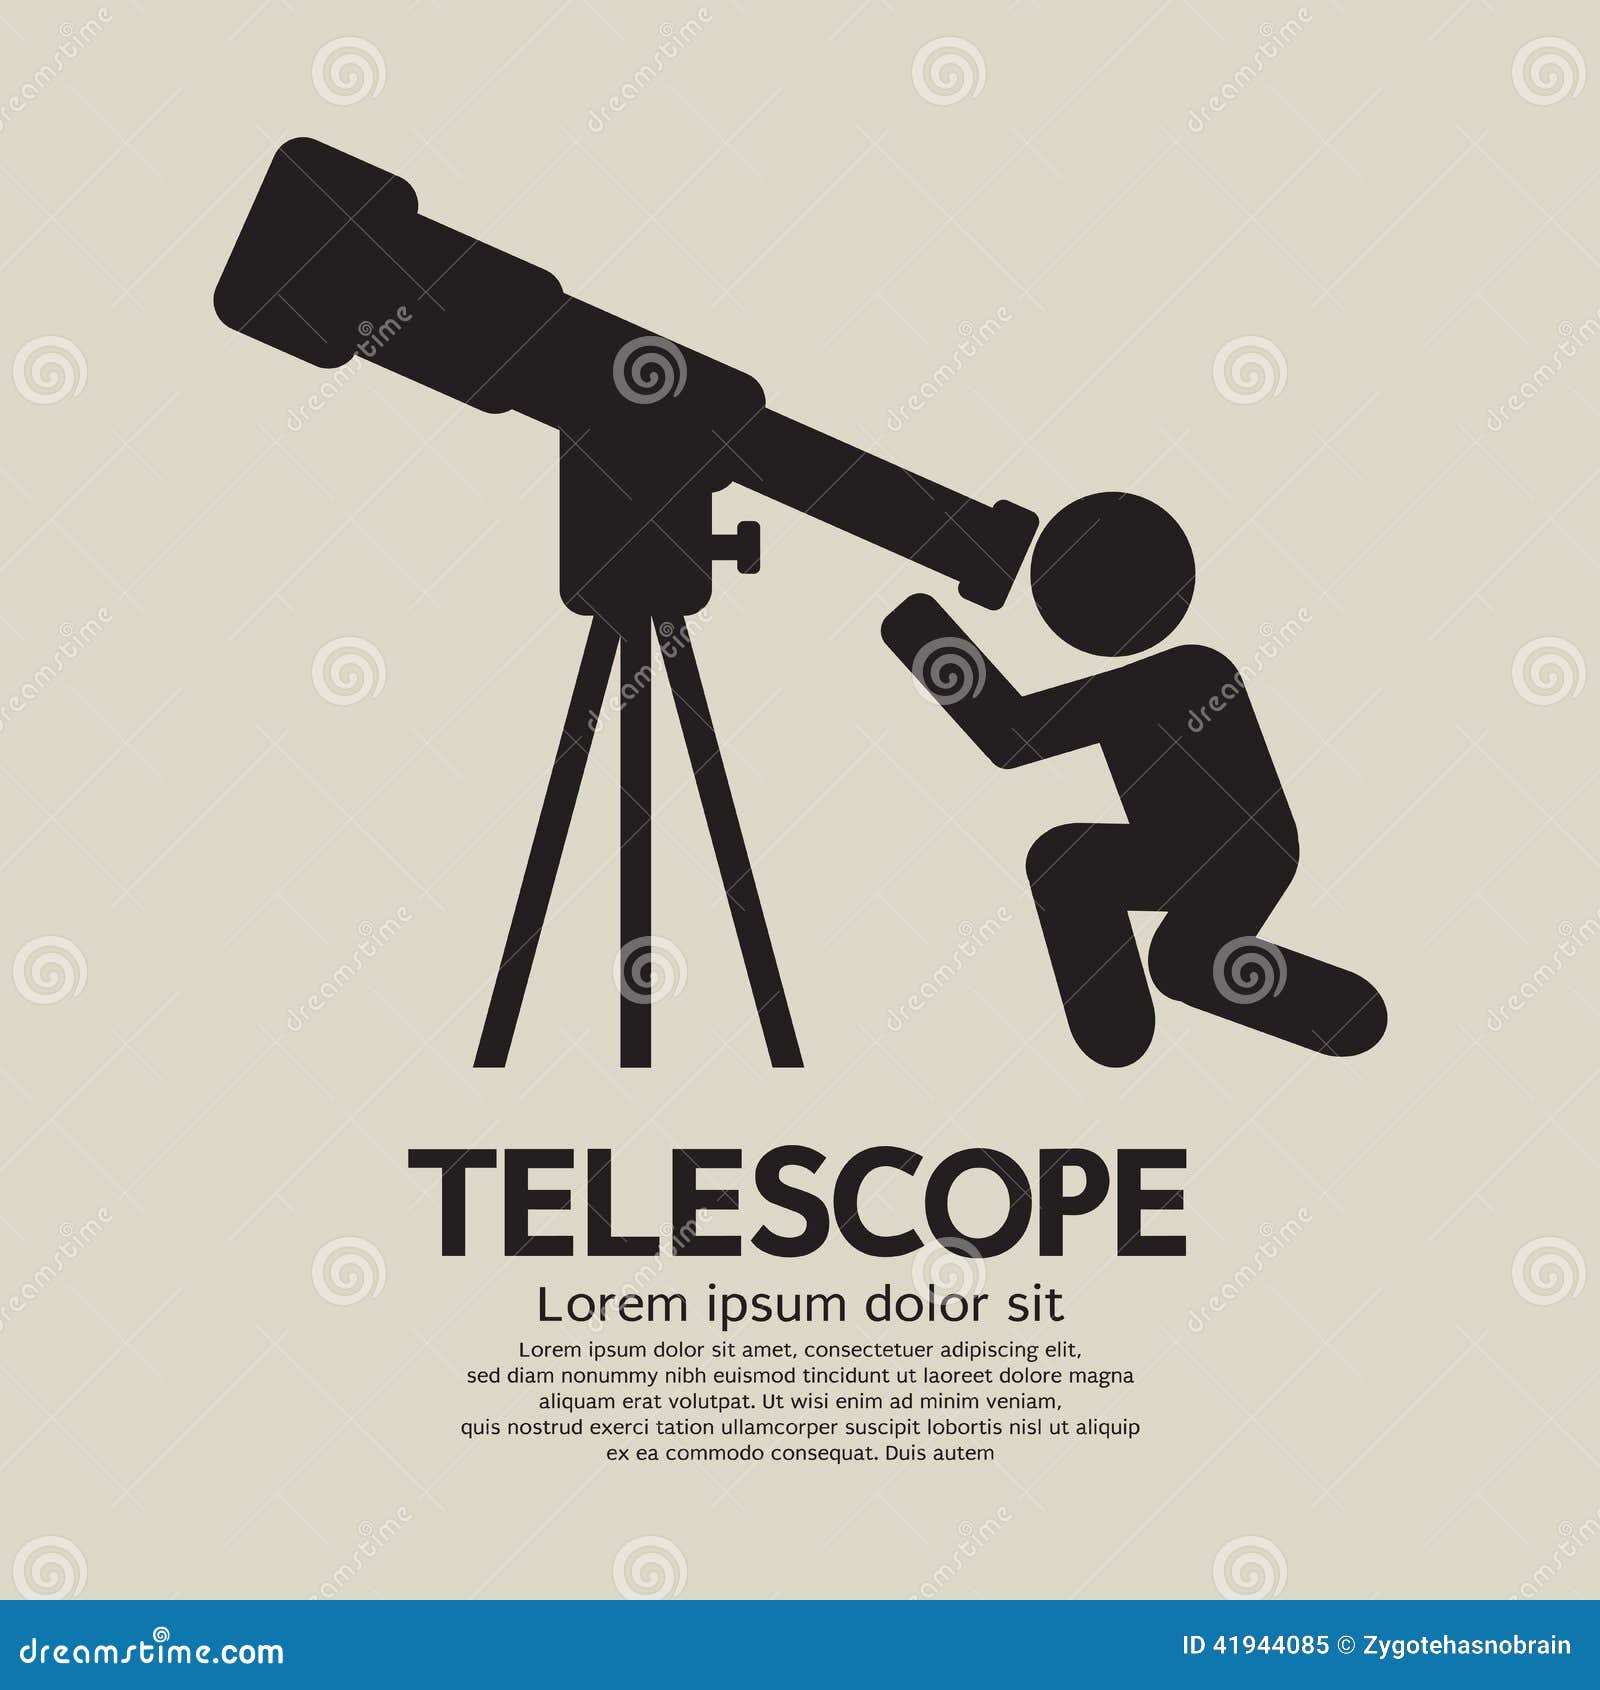 telescope animated clipart - photo #41